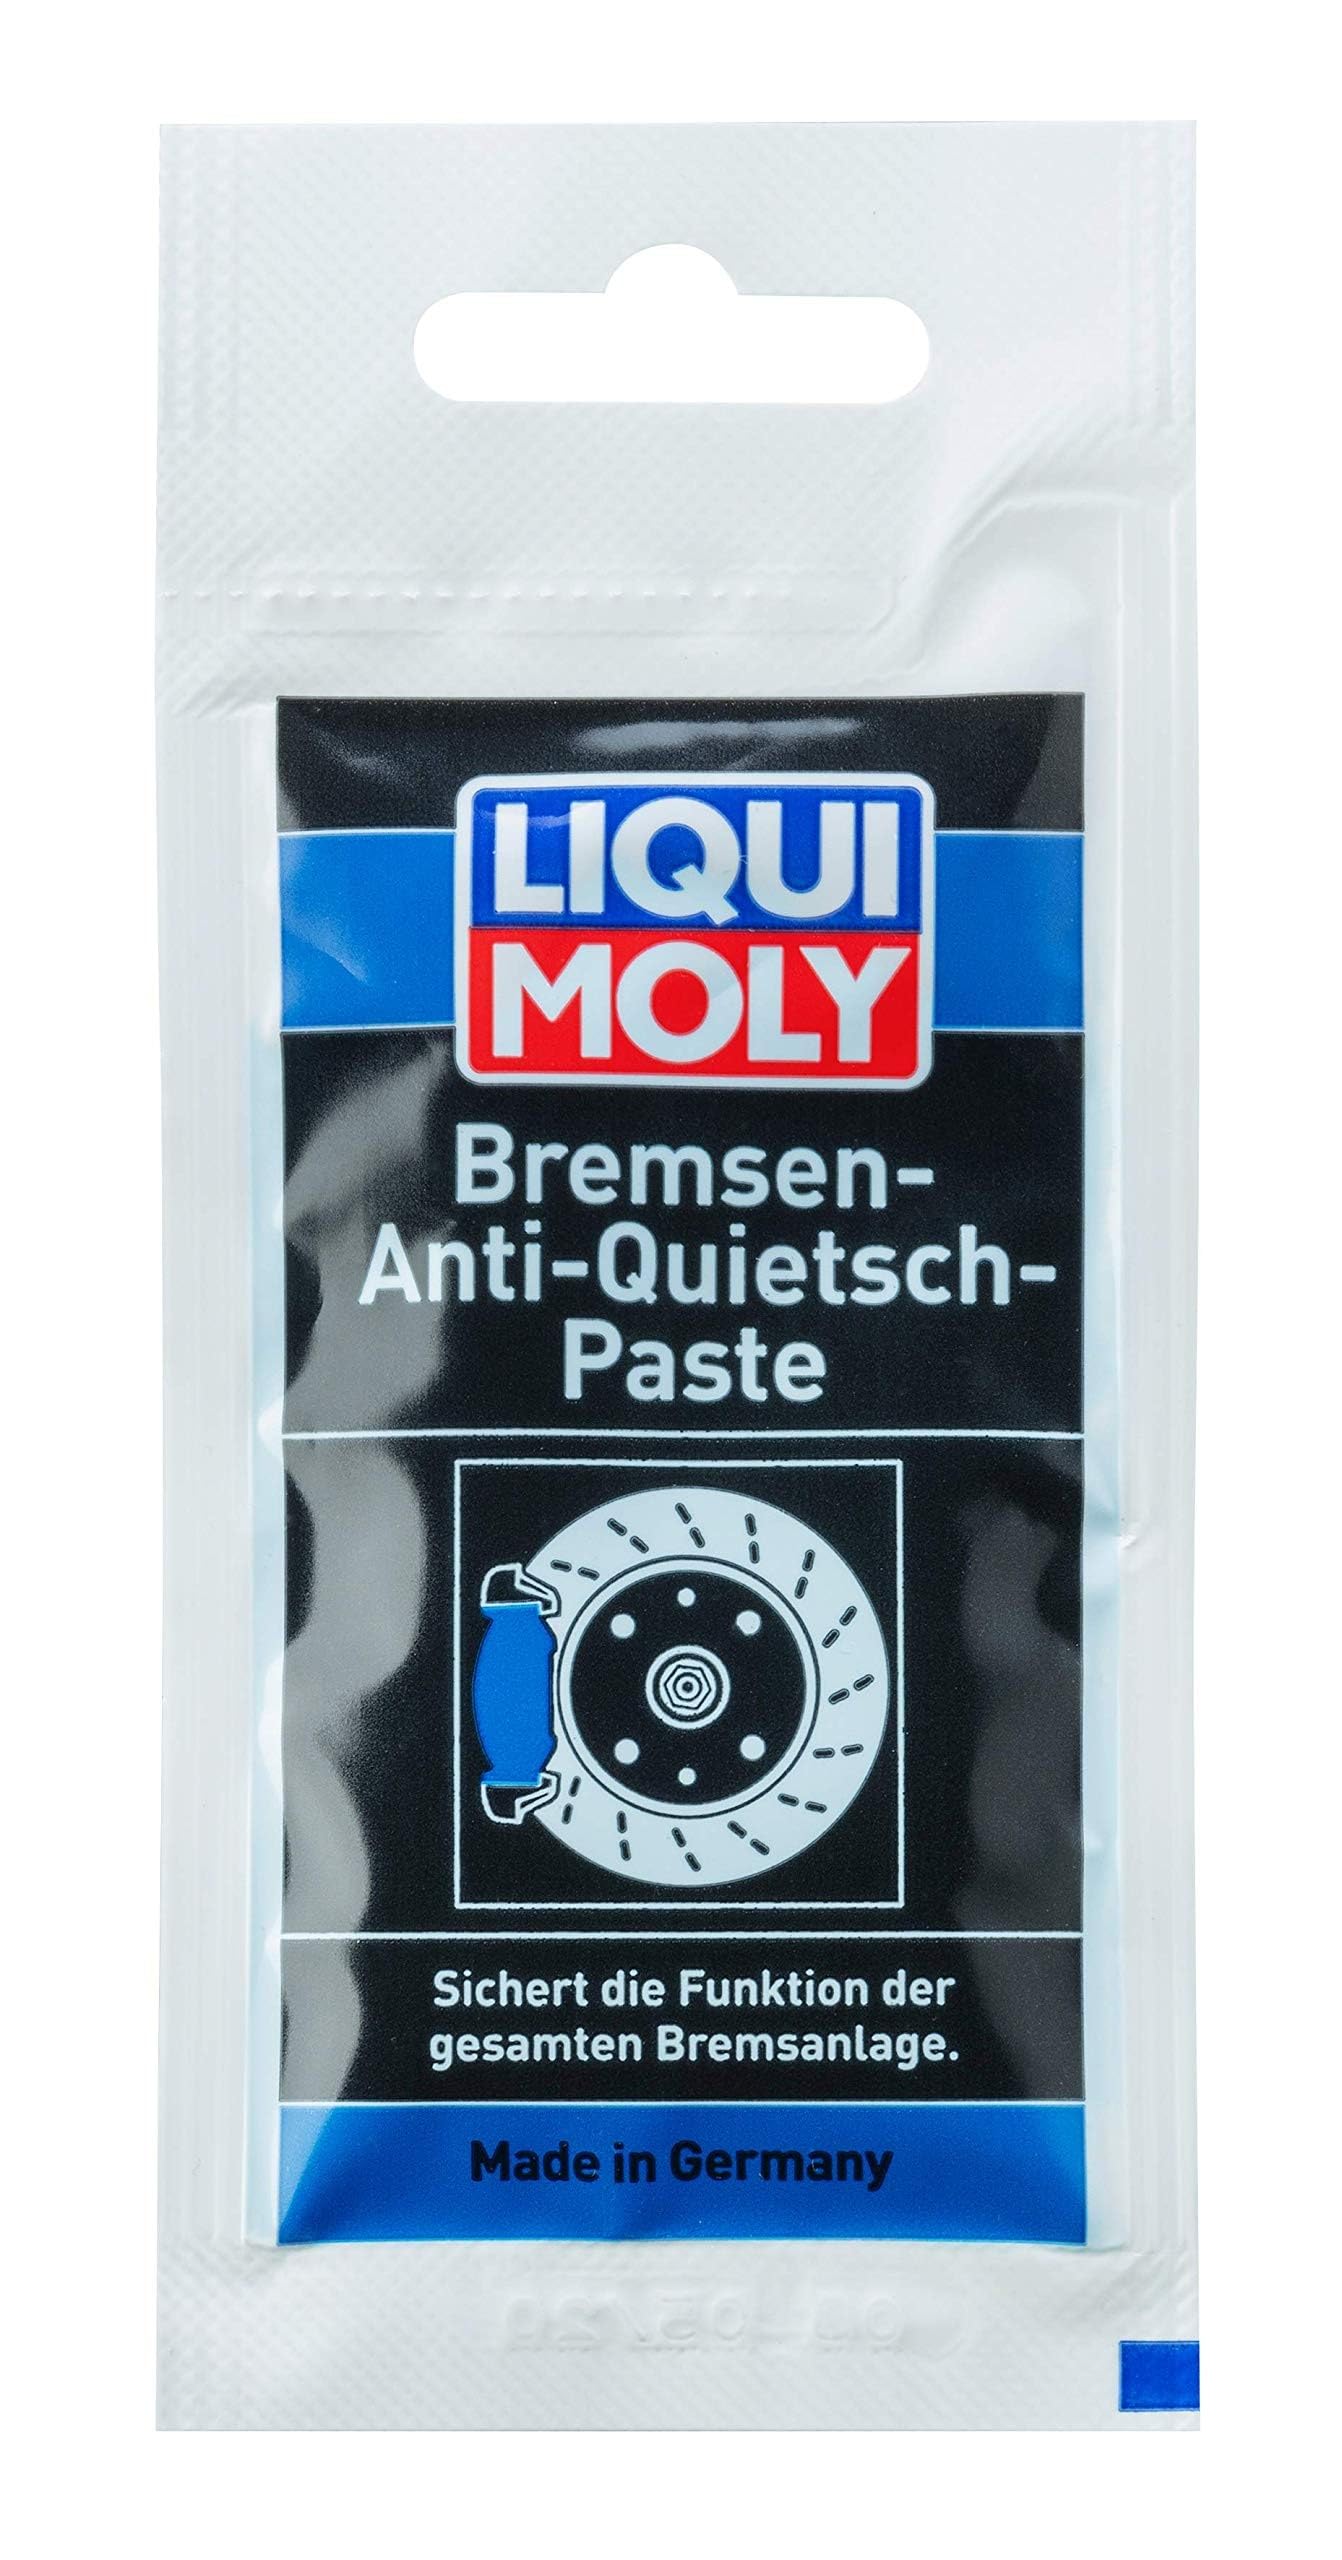 LIQUI MOLY Bremsen-Anti-Quietsch-Paste | 10 g | Paste | Art.-Nr.: 3078 von Liqui Moly